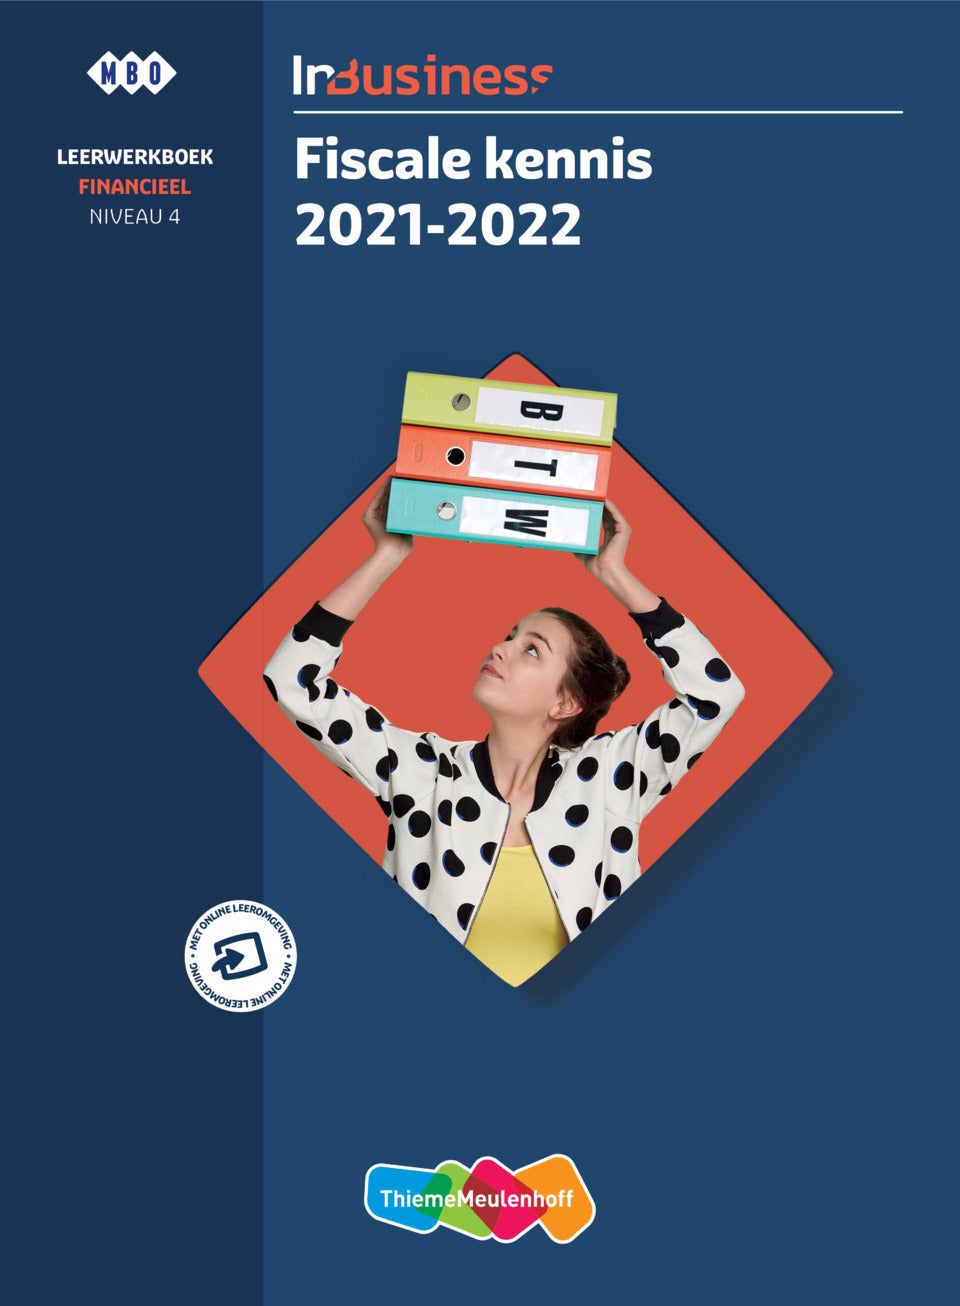 InBusiness Financieel Fiscale kennis 2021-2022, Leerwerkboek+ online basis ThiemeMeulenhoff